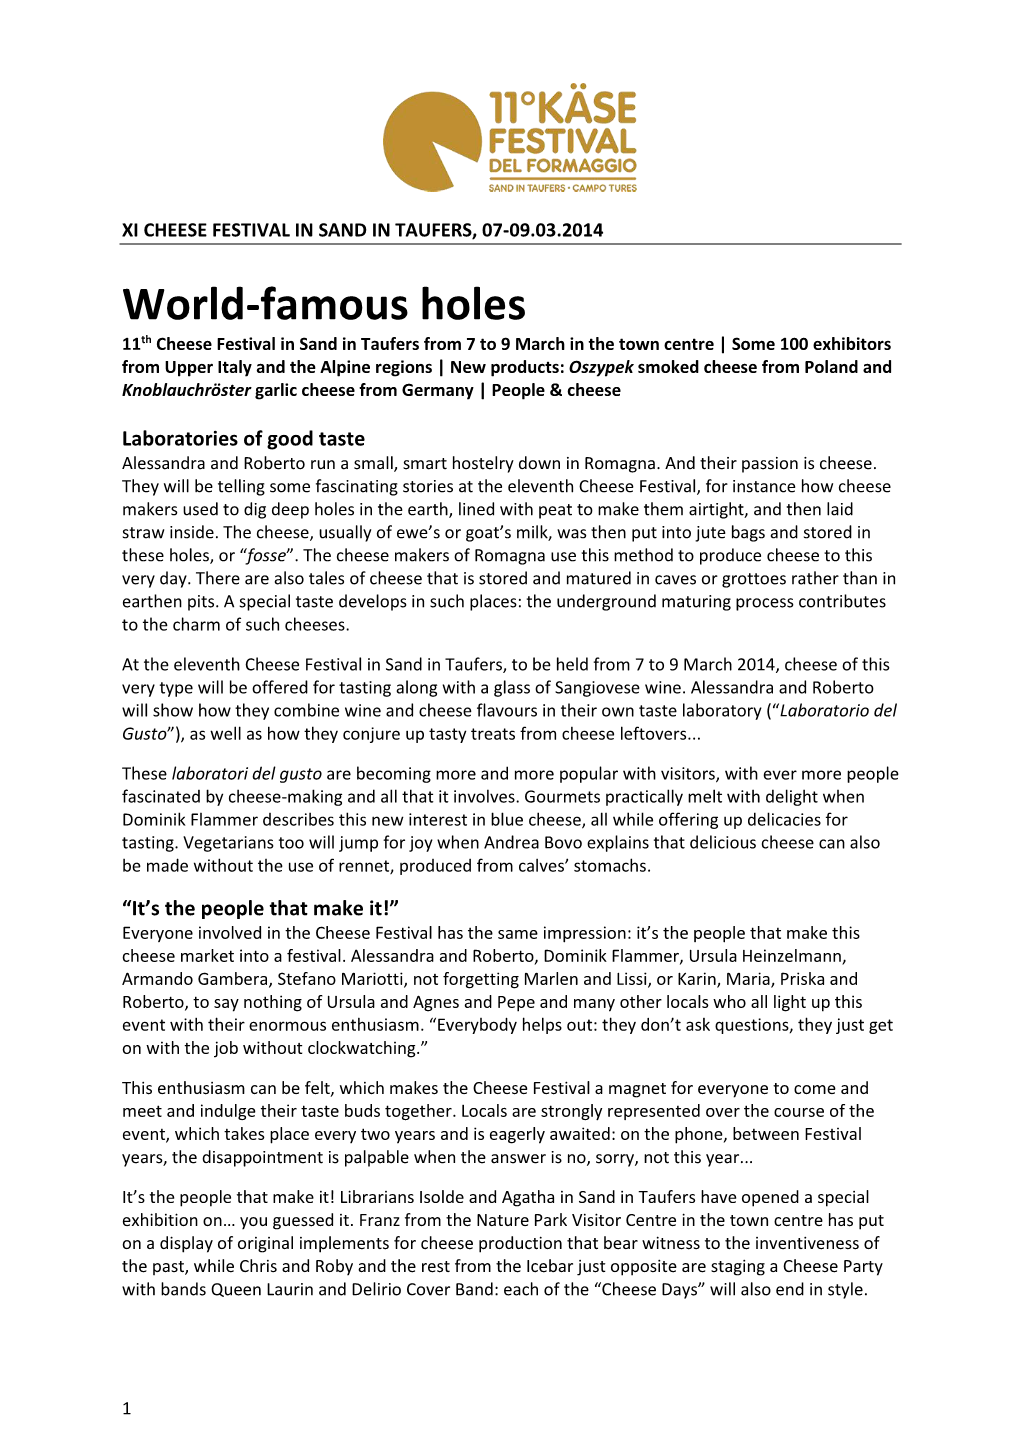 World-Famous Holes